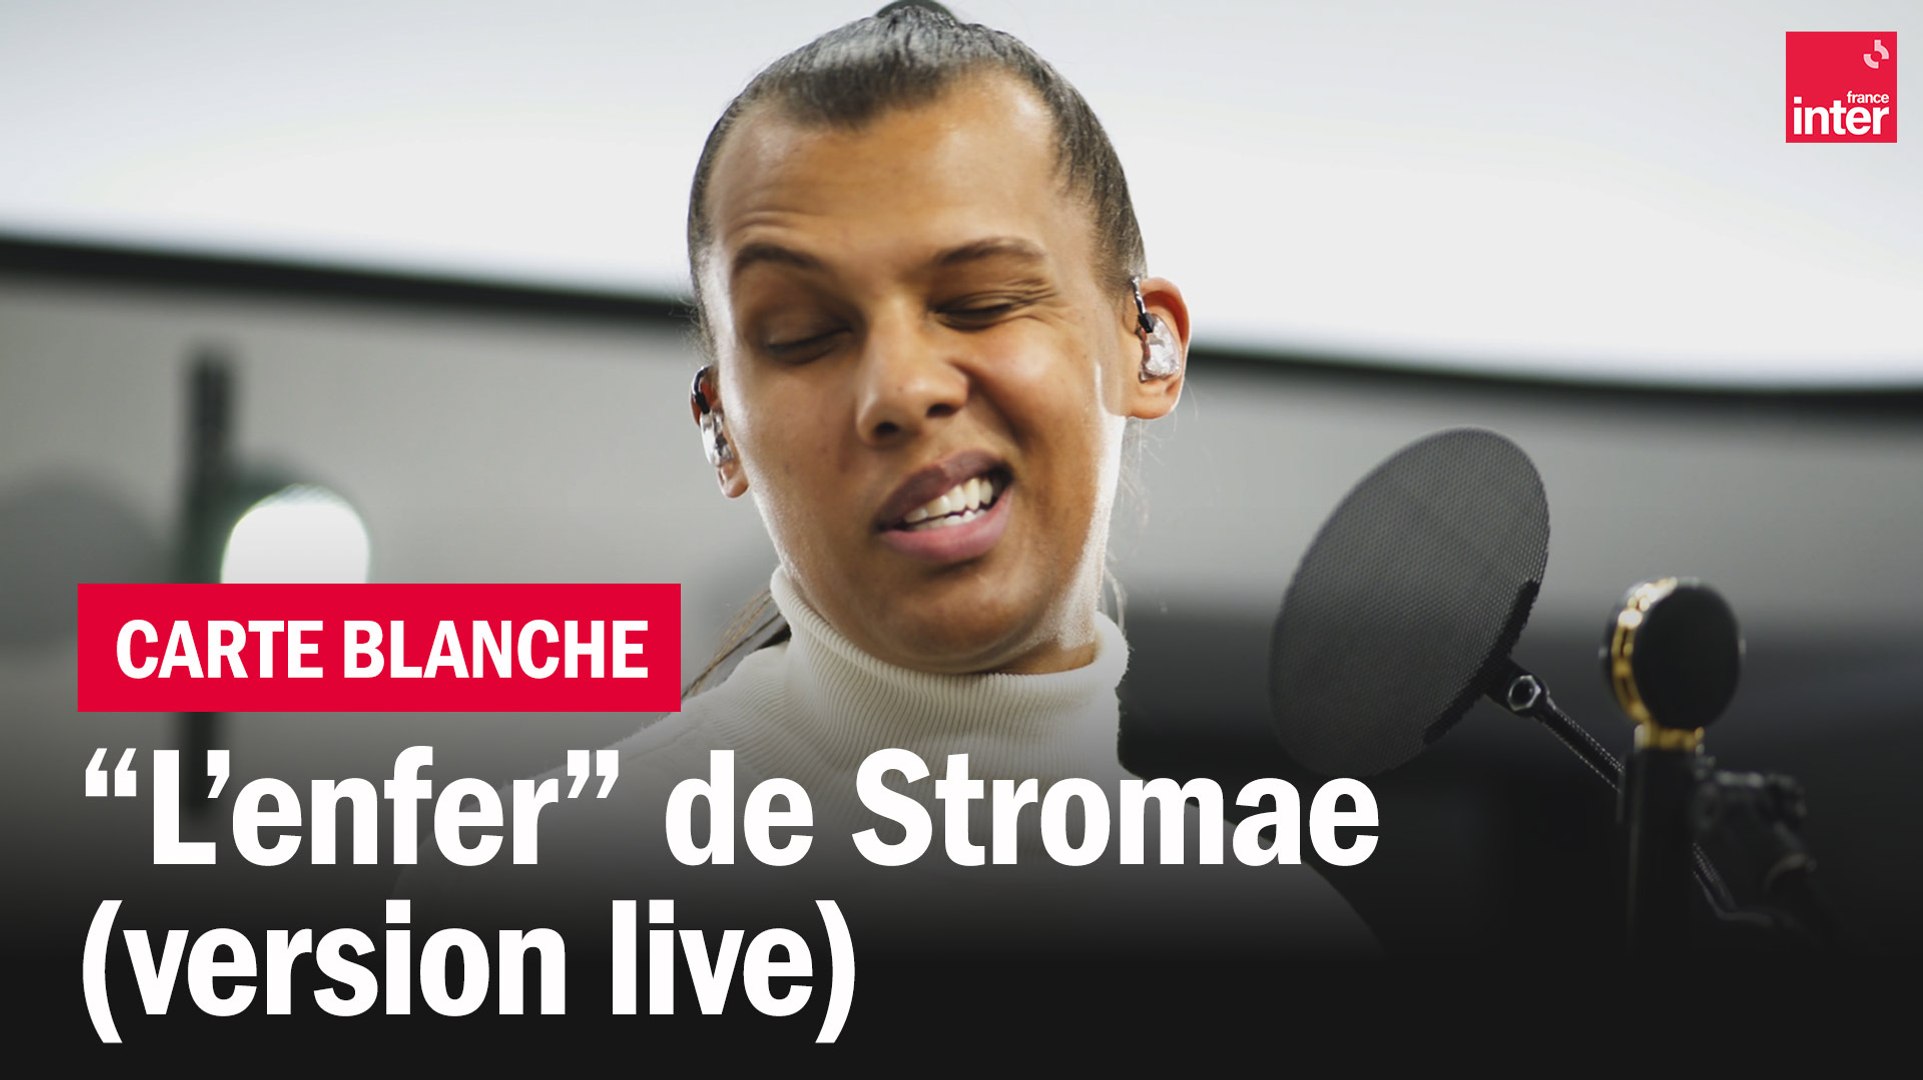 L'Enfer" de Stromae en live dans "Boomerang" - Vidéo Dailymotion